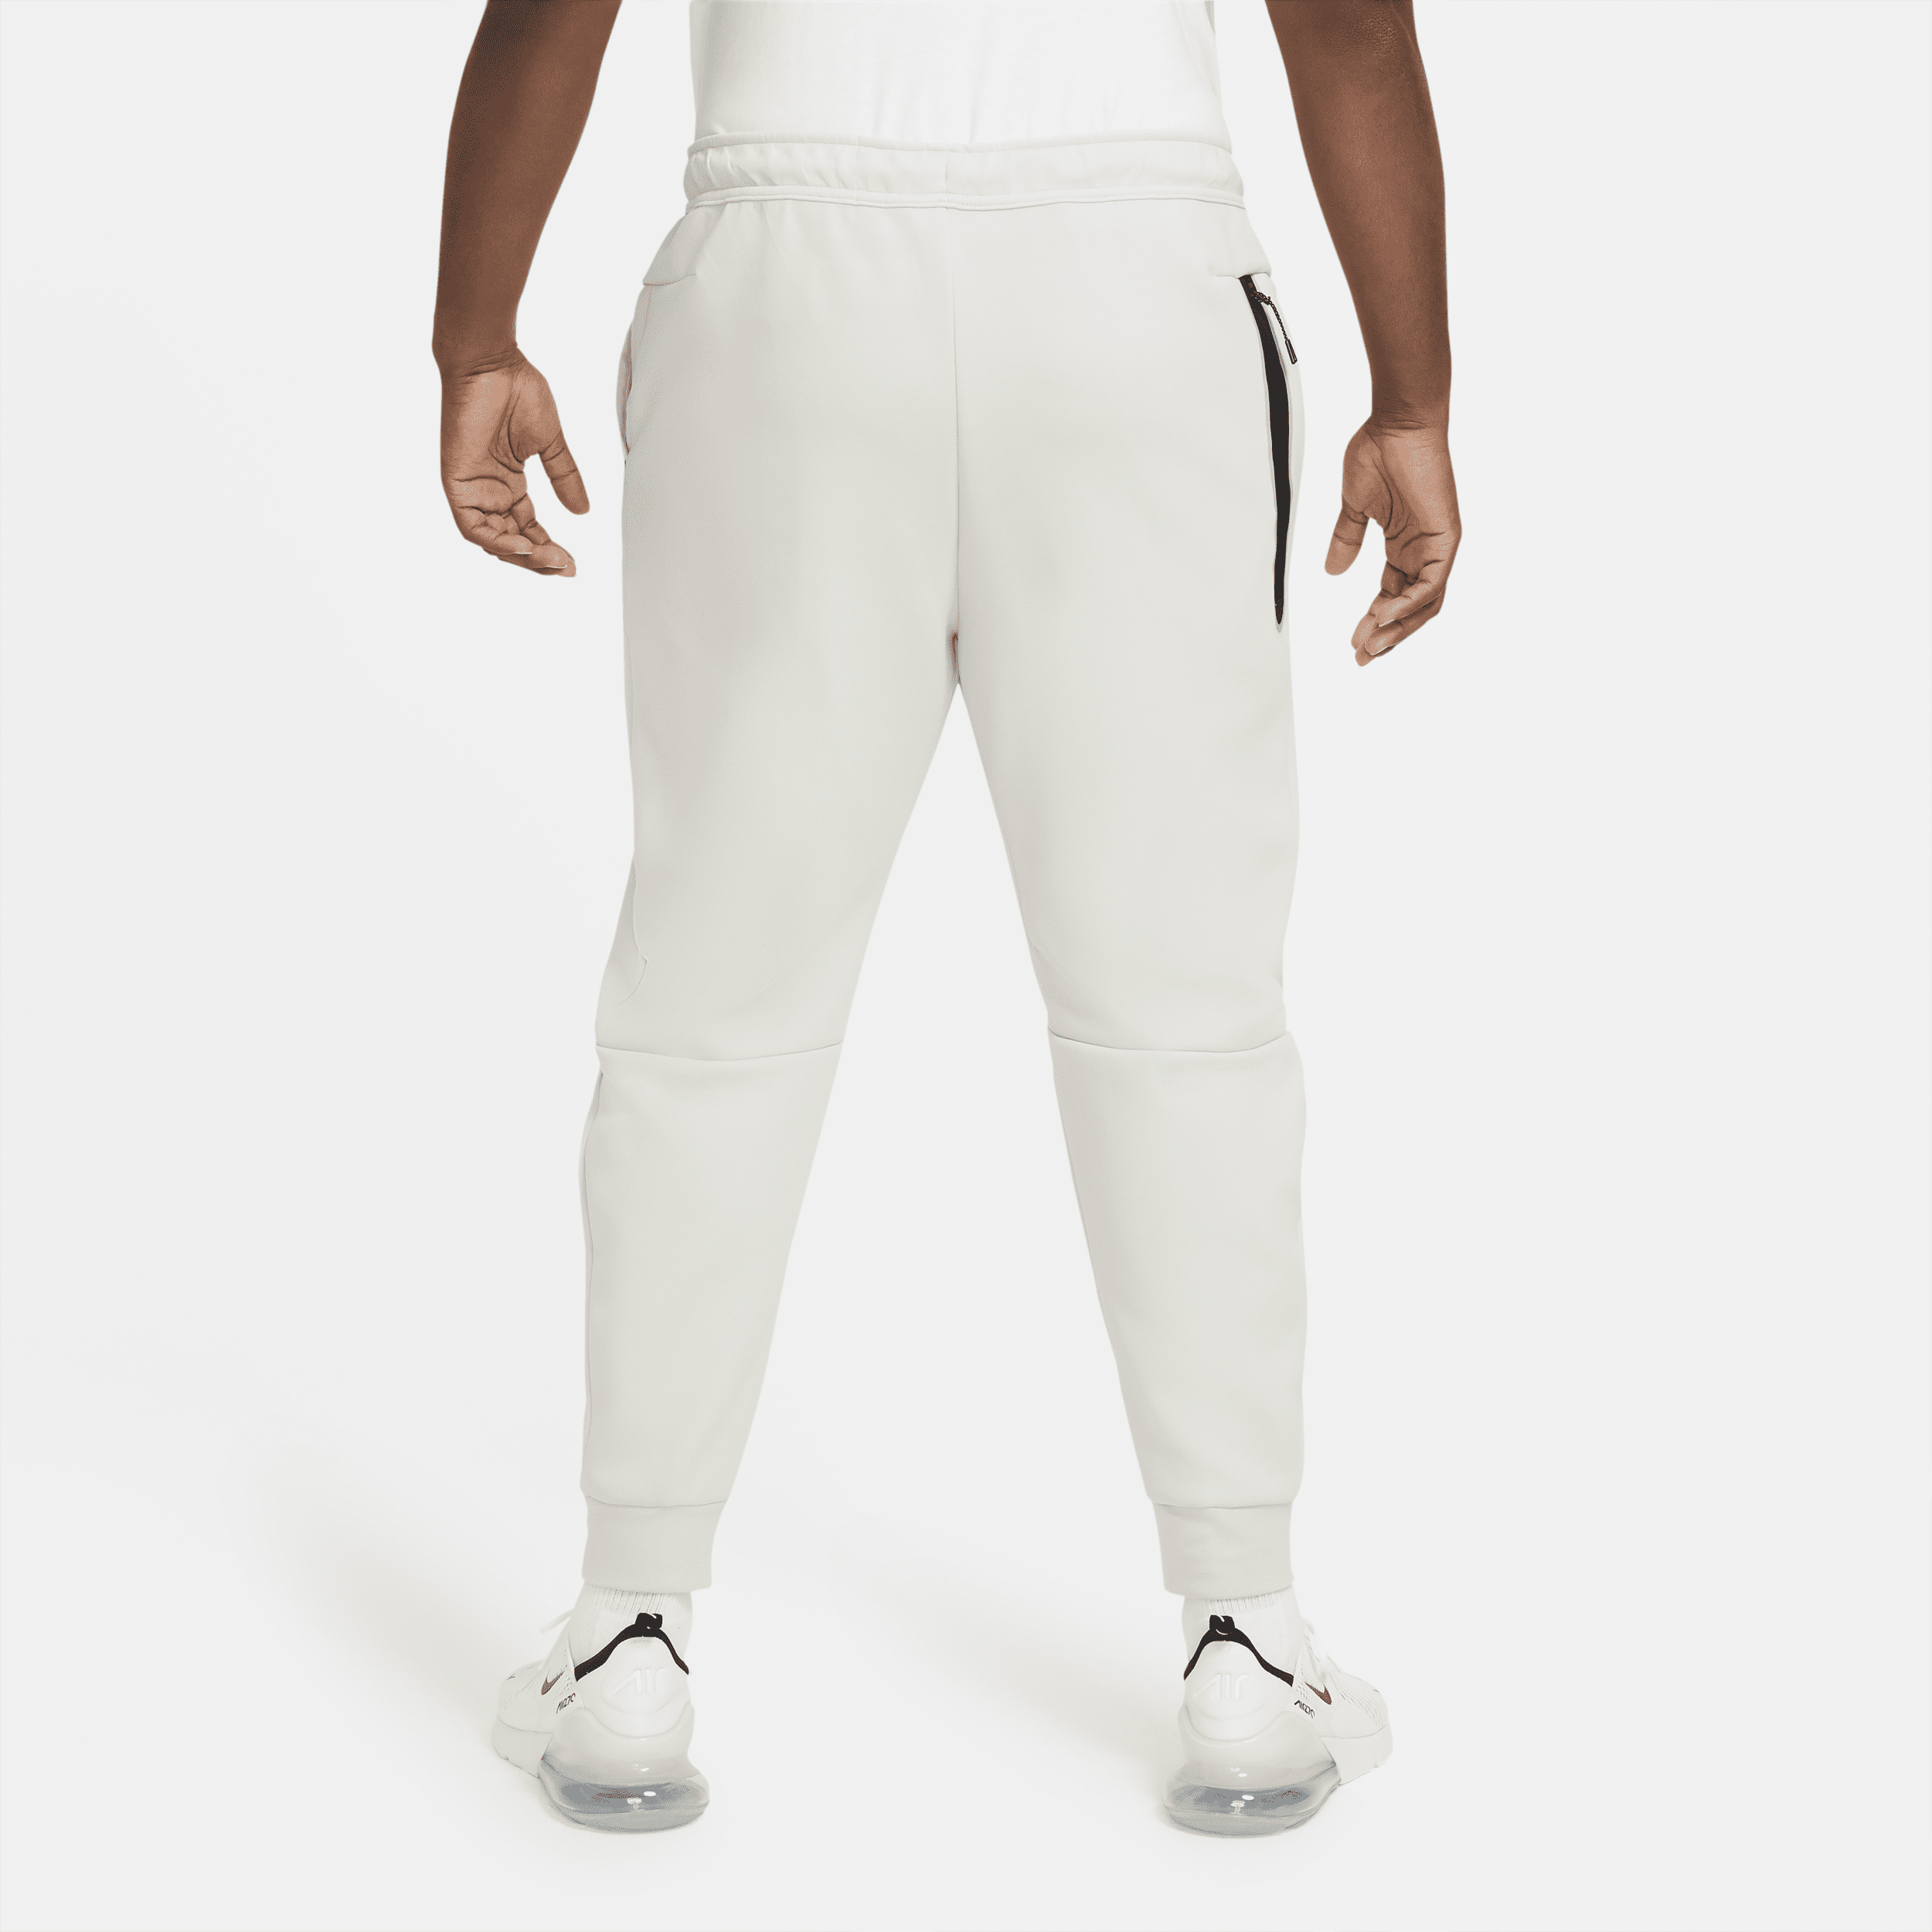 Nike | Paris Saint-Germain Dri-Fit Travel Pants | Sail/White |  SportsDirect.com